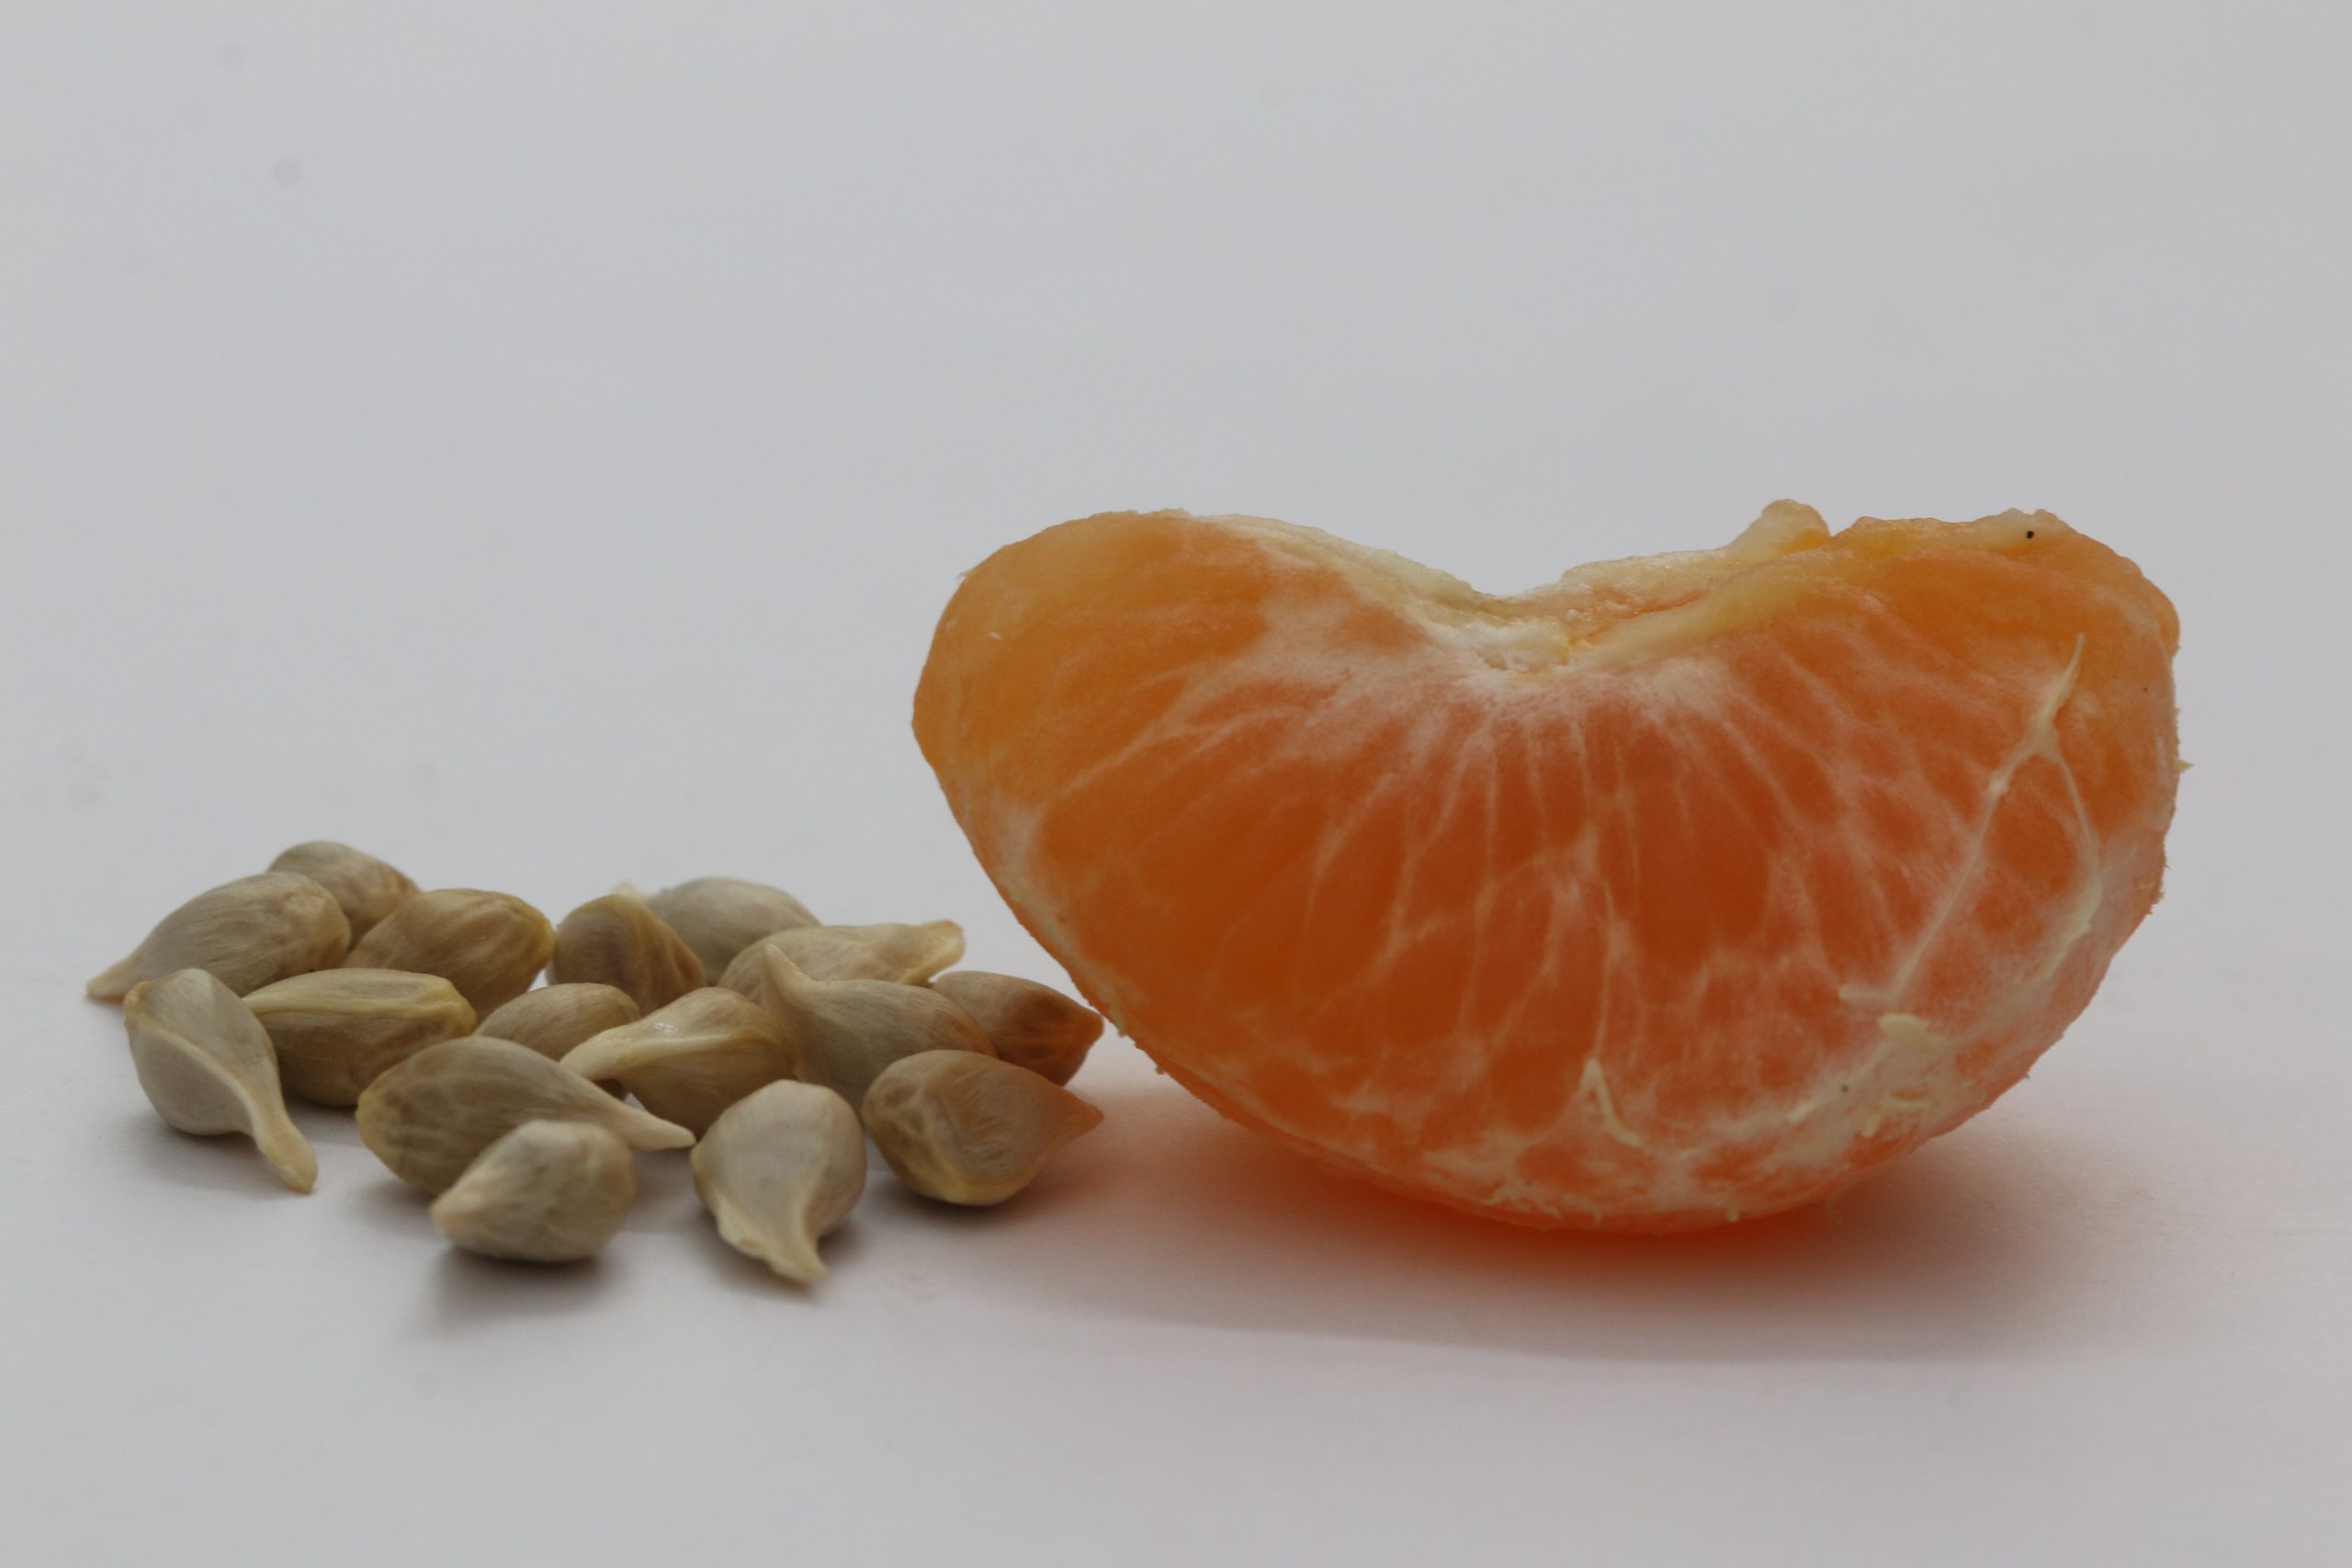 orange wedge and seeds